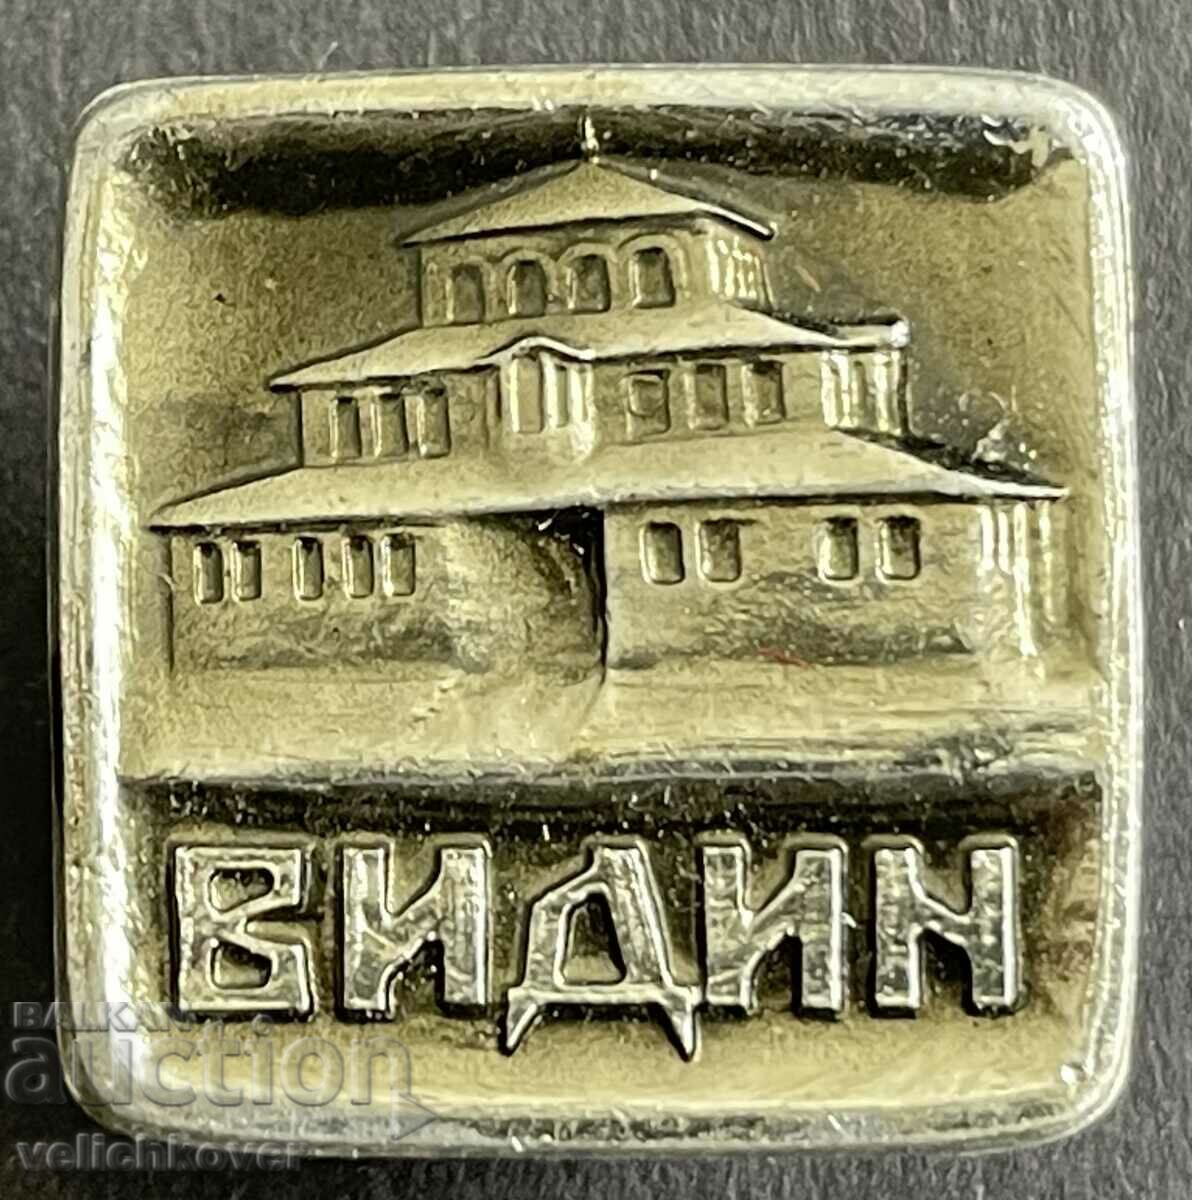 37475 България знак герб град Видин